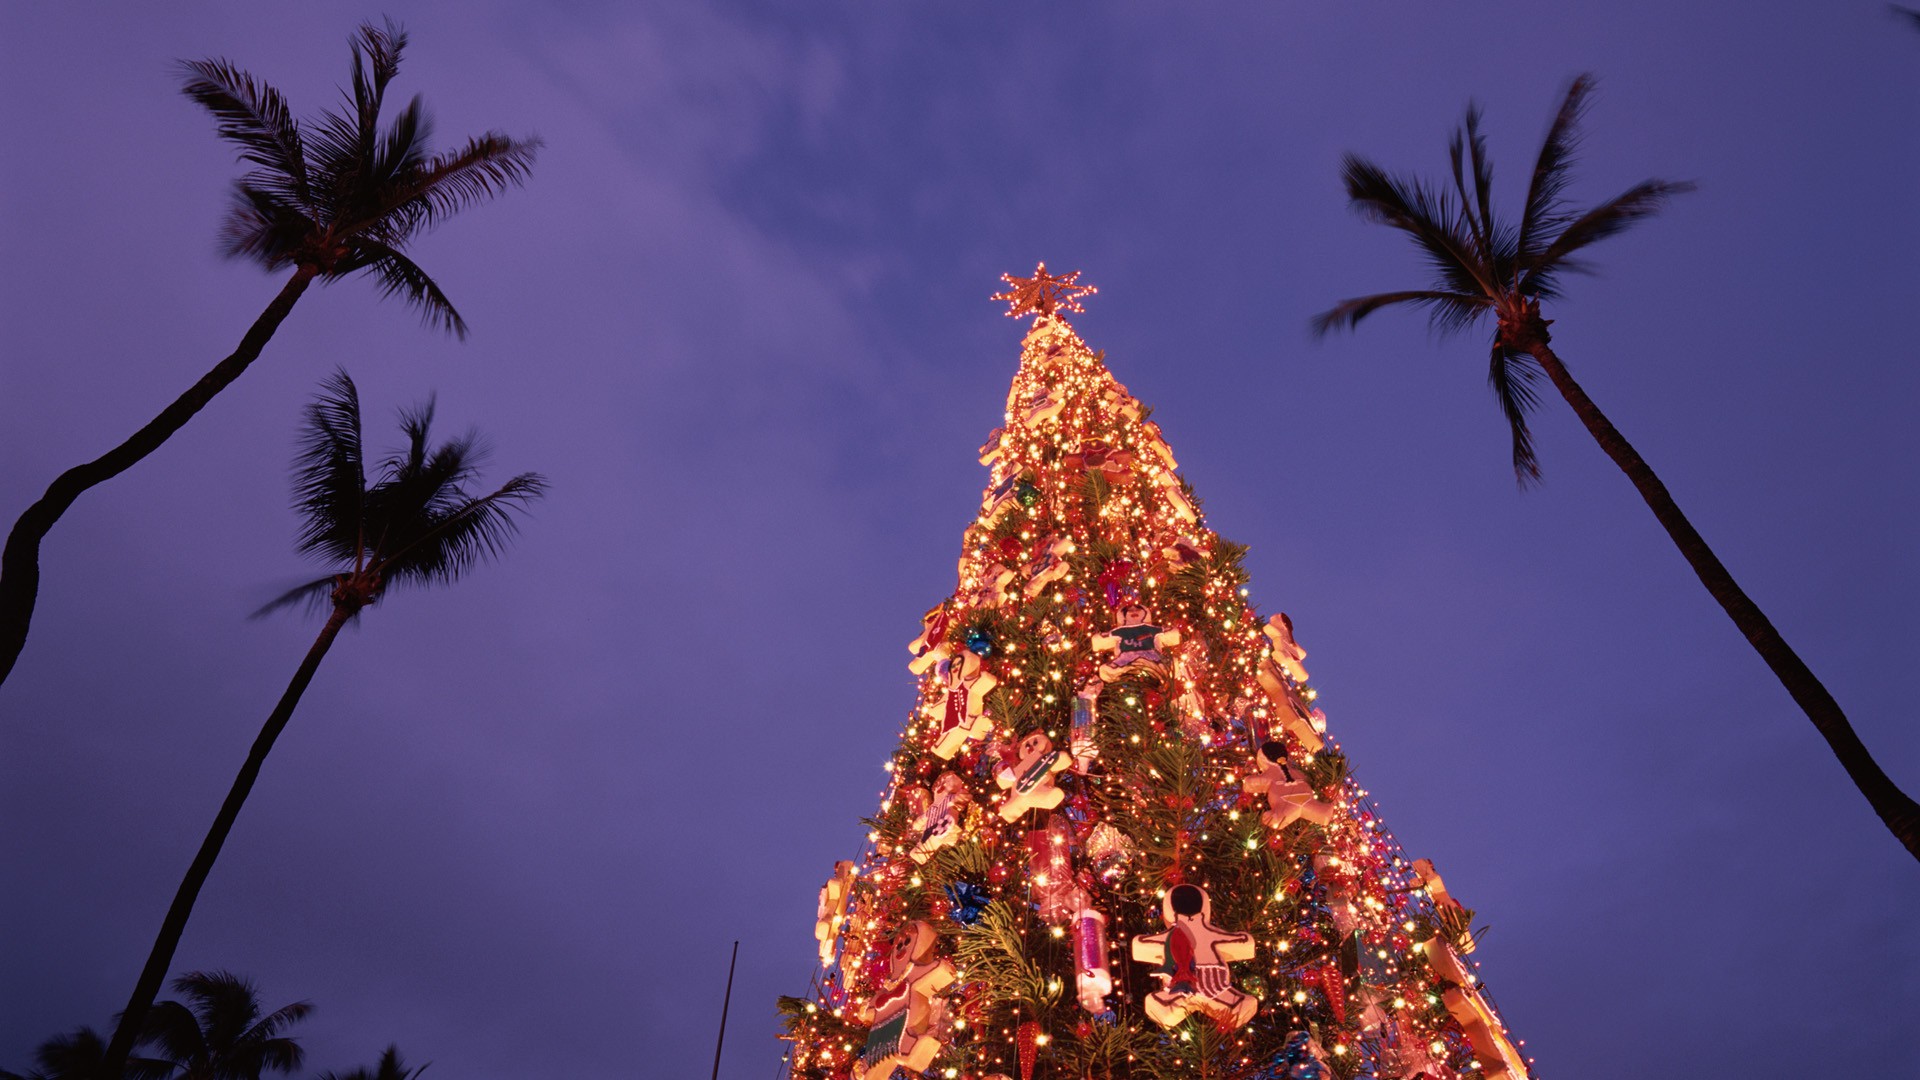 Hawaii, Christmas, Christmas trees, palm trees, Oahu - desktop wallpaper